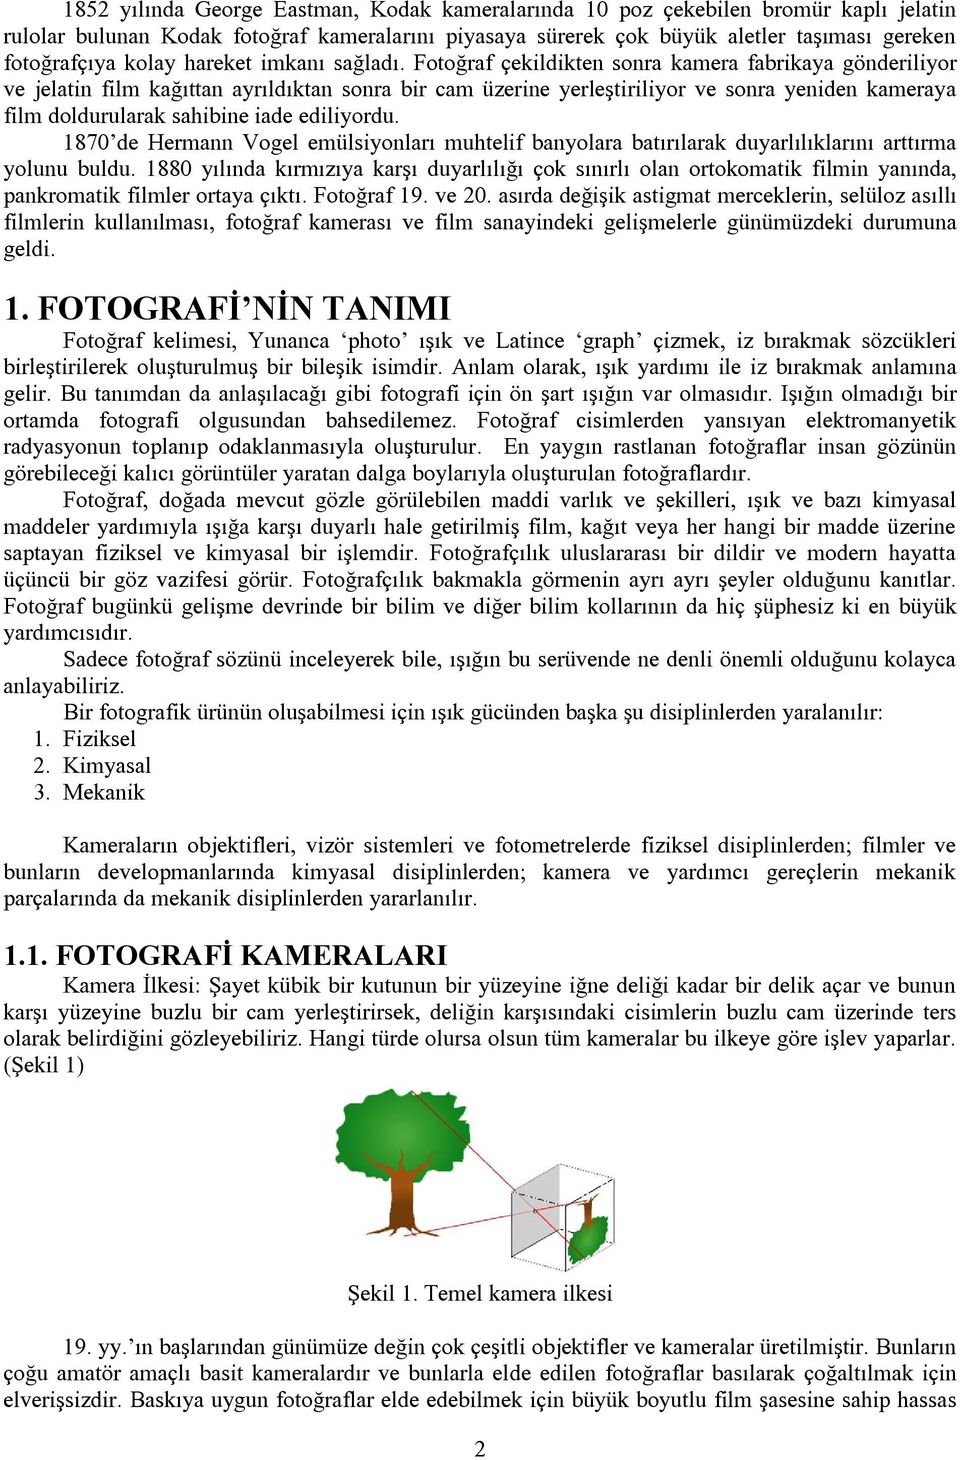 Реферат: History Of Photography Essay Research Paper DaguerreotypesIn